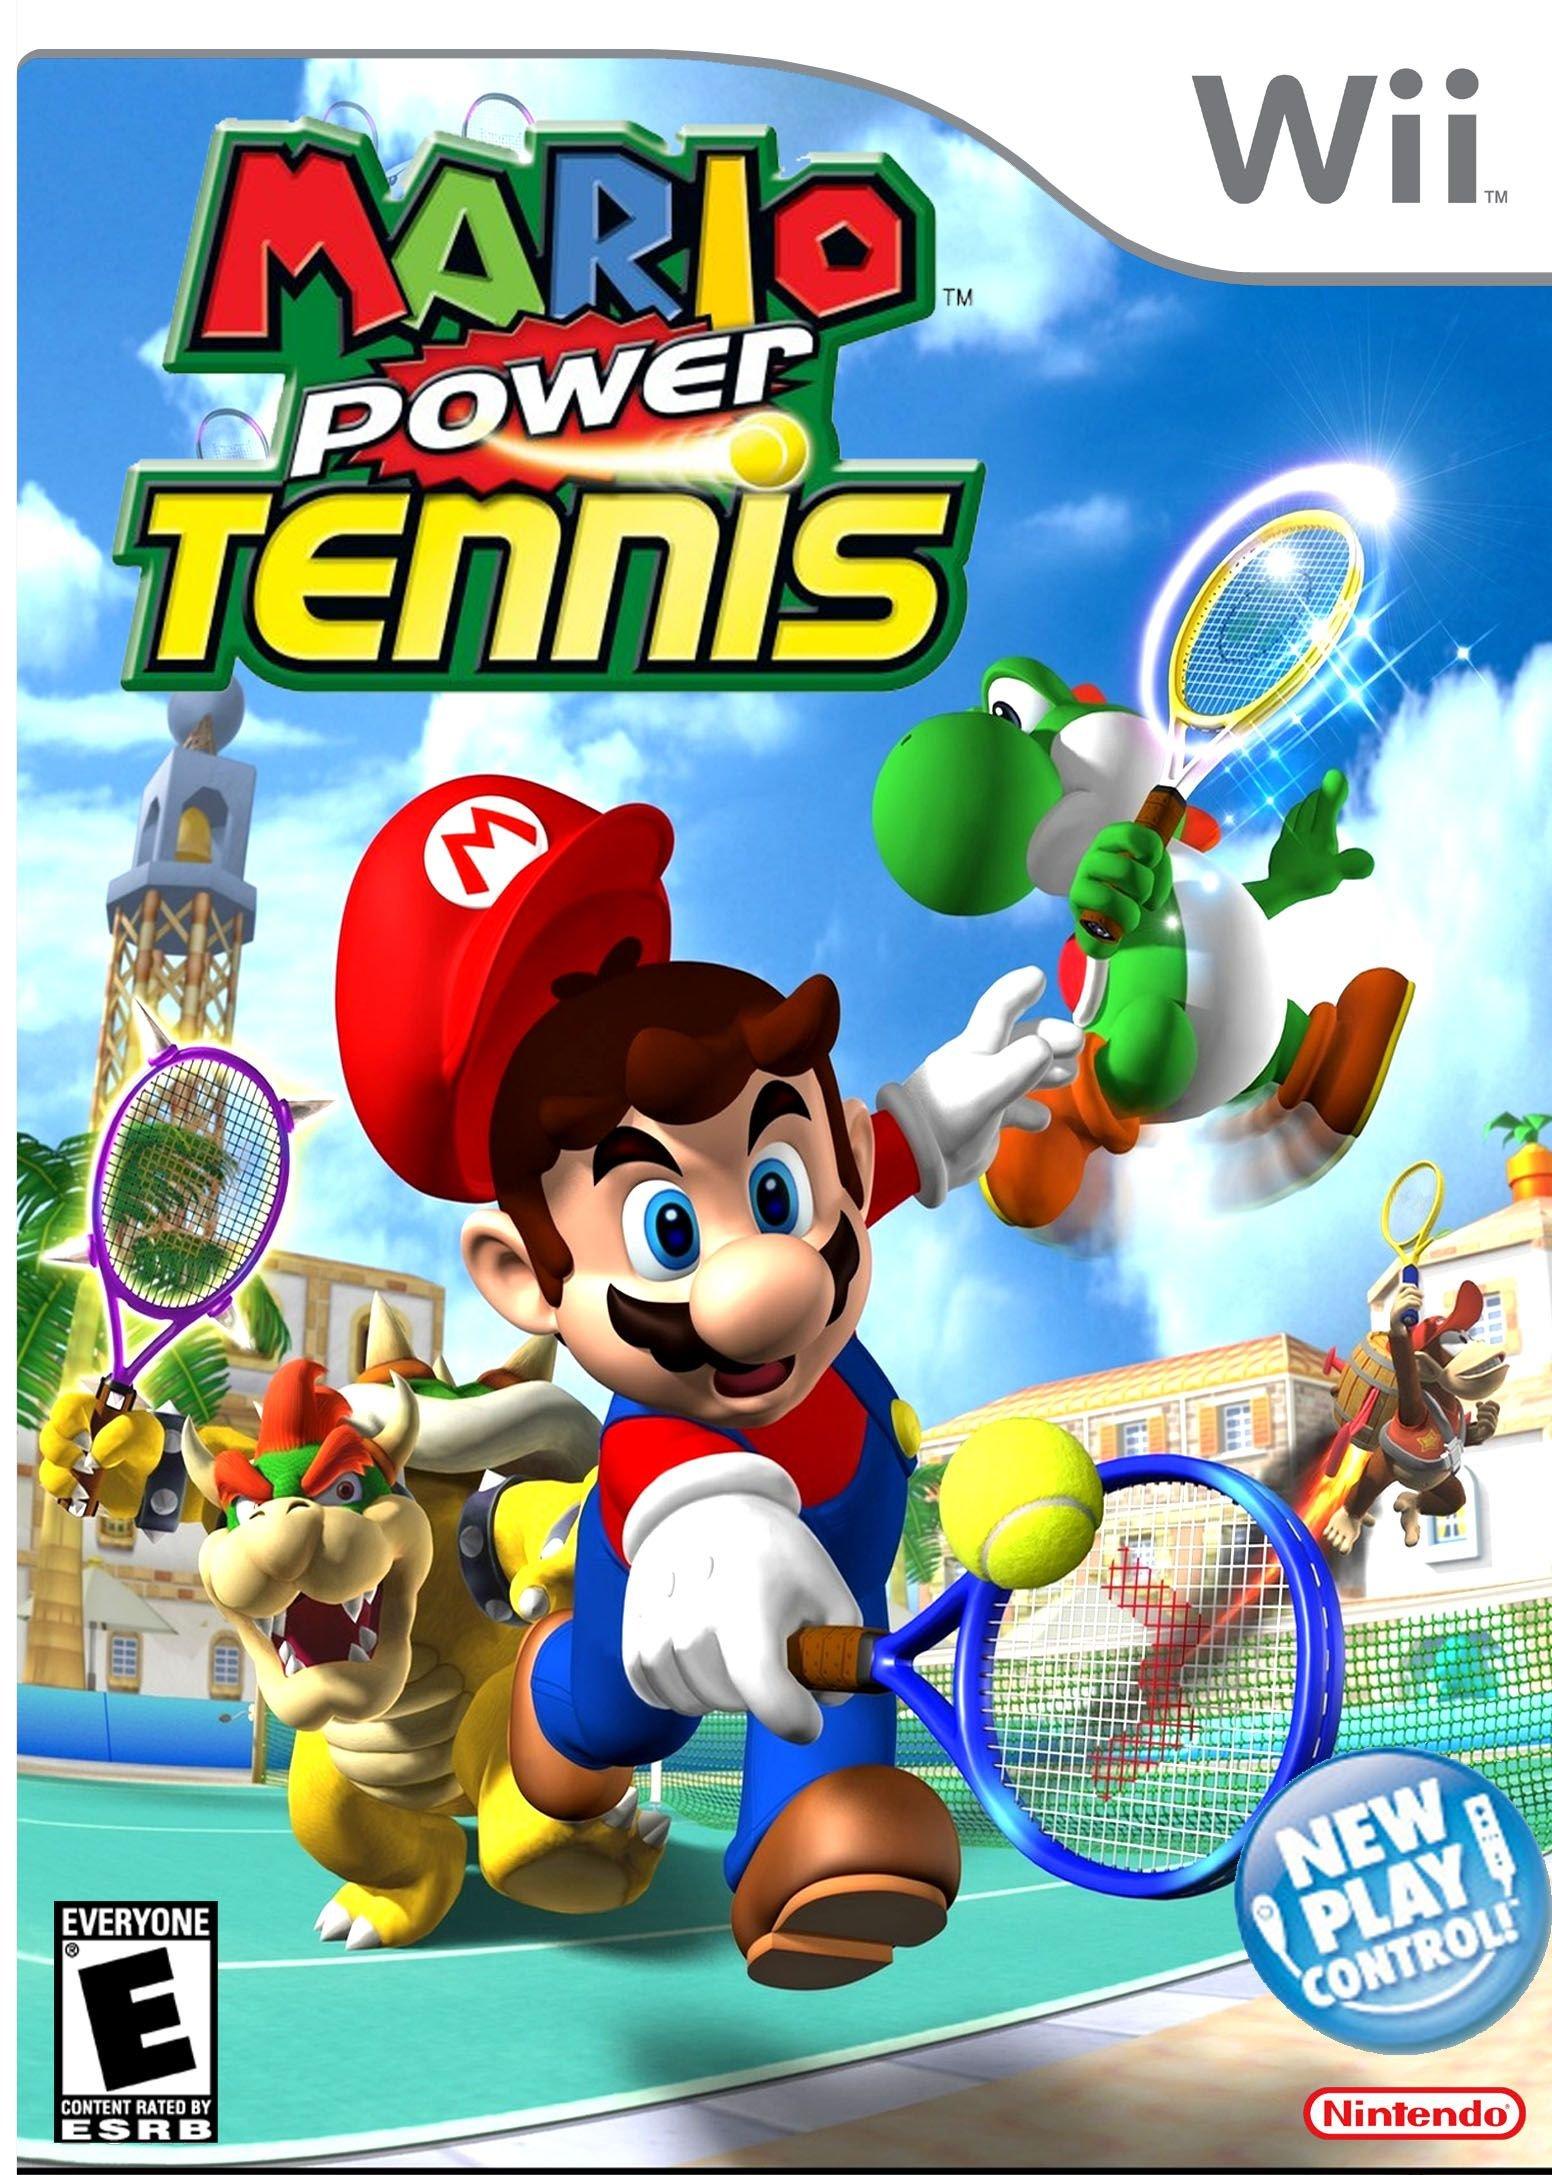 mario power tennis release date